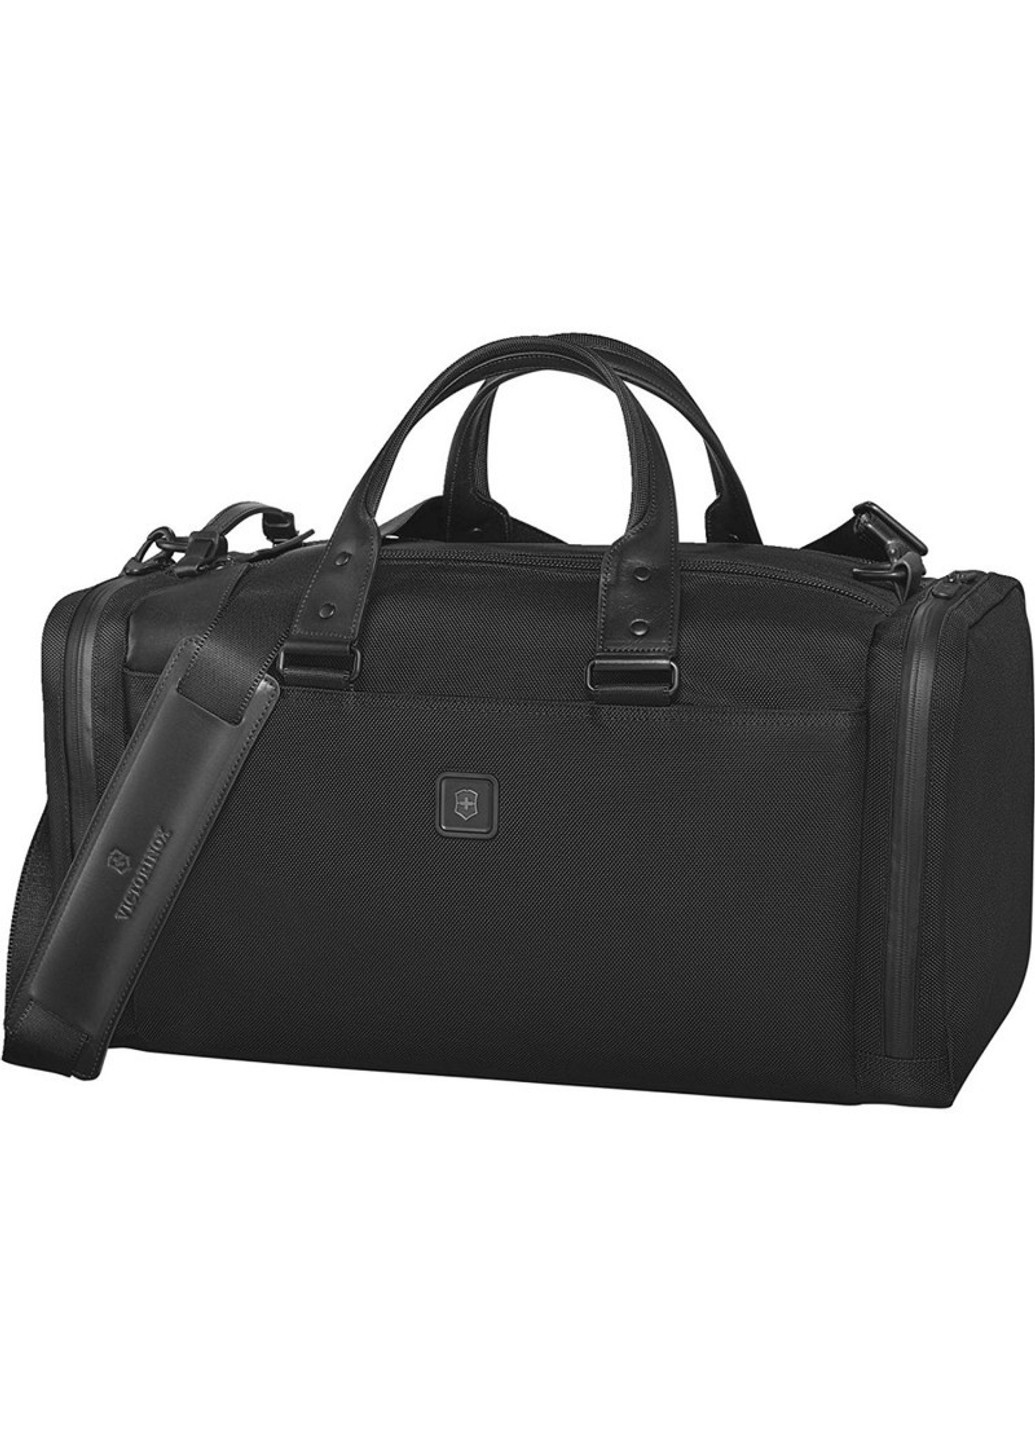 Дорожня сумка LEXICON 2.0 / Black Vt601194 Victorinox Travel (271813682)